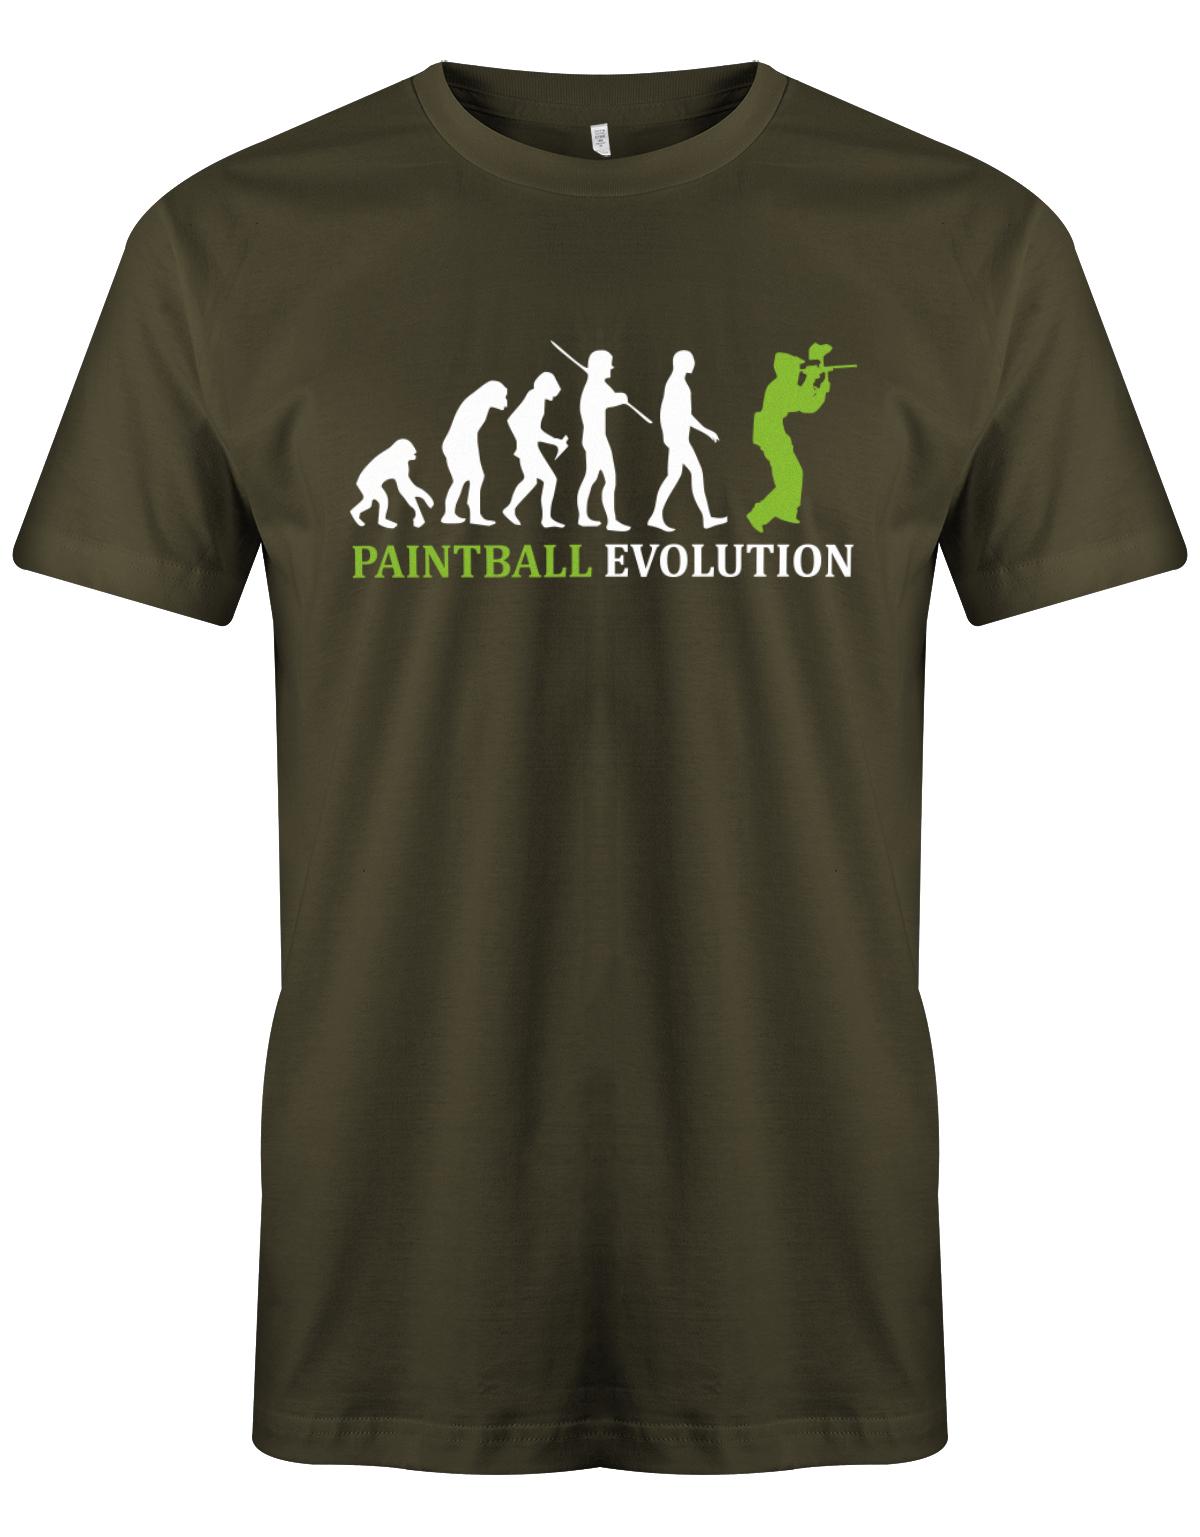 Paintball-Evolution-Herren-Shirt-Army